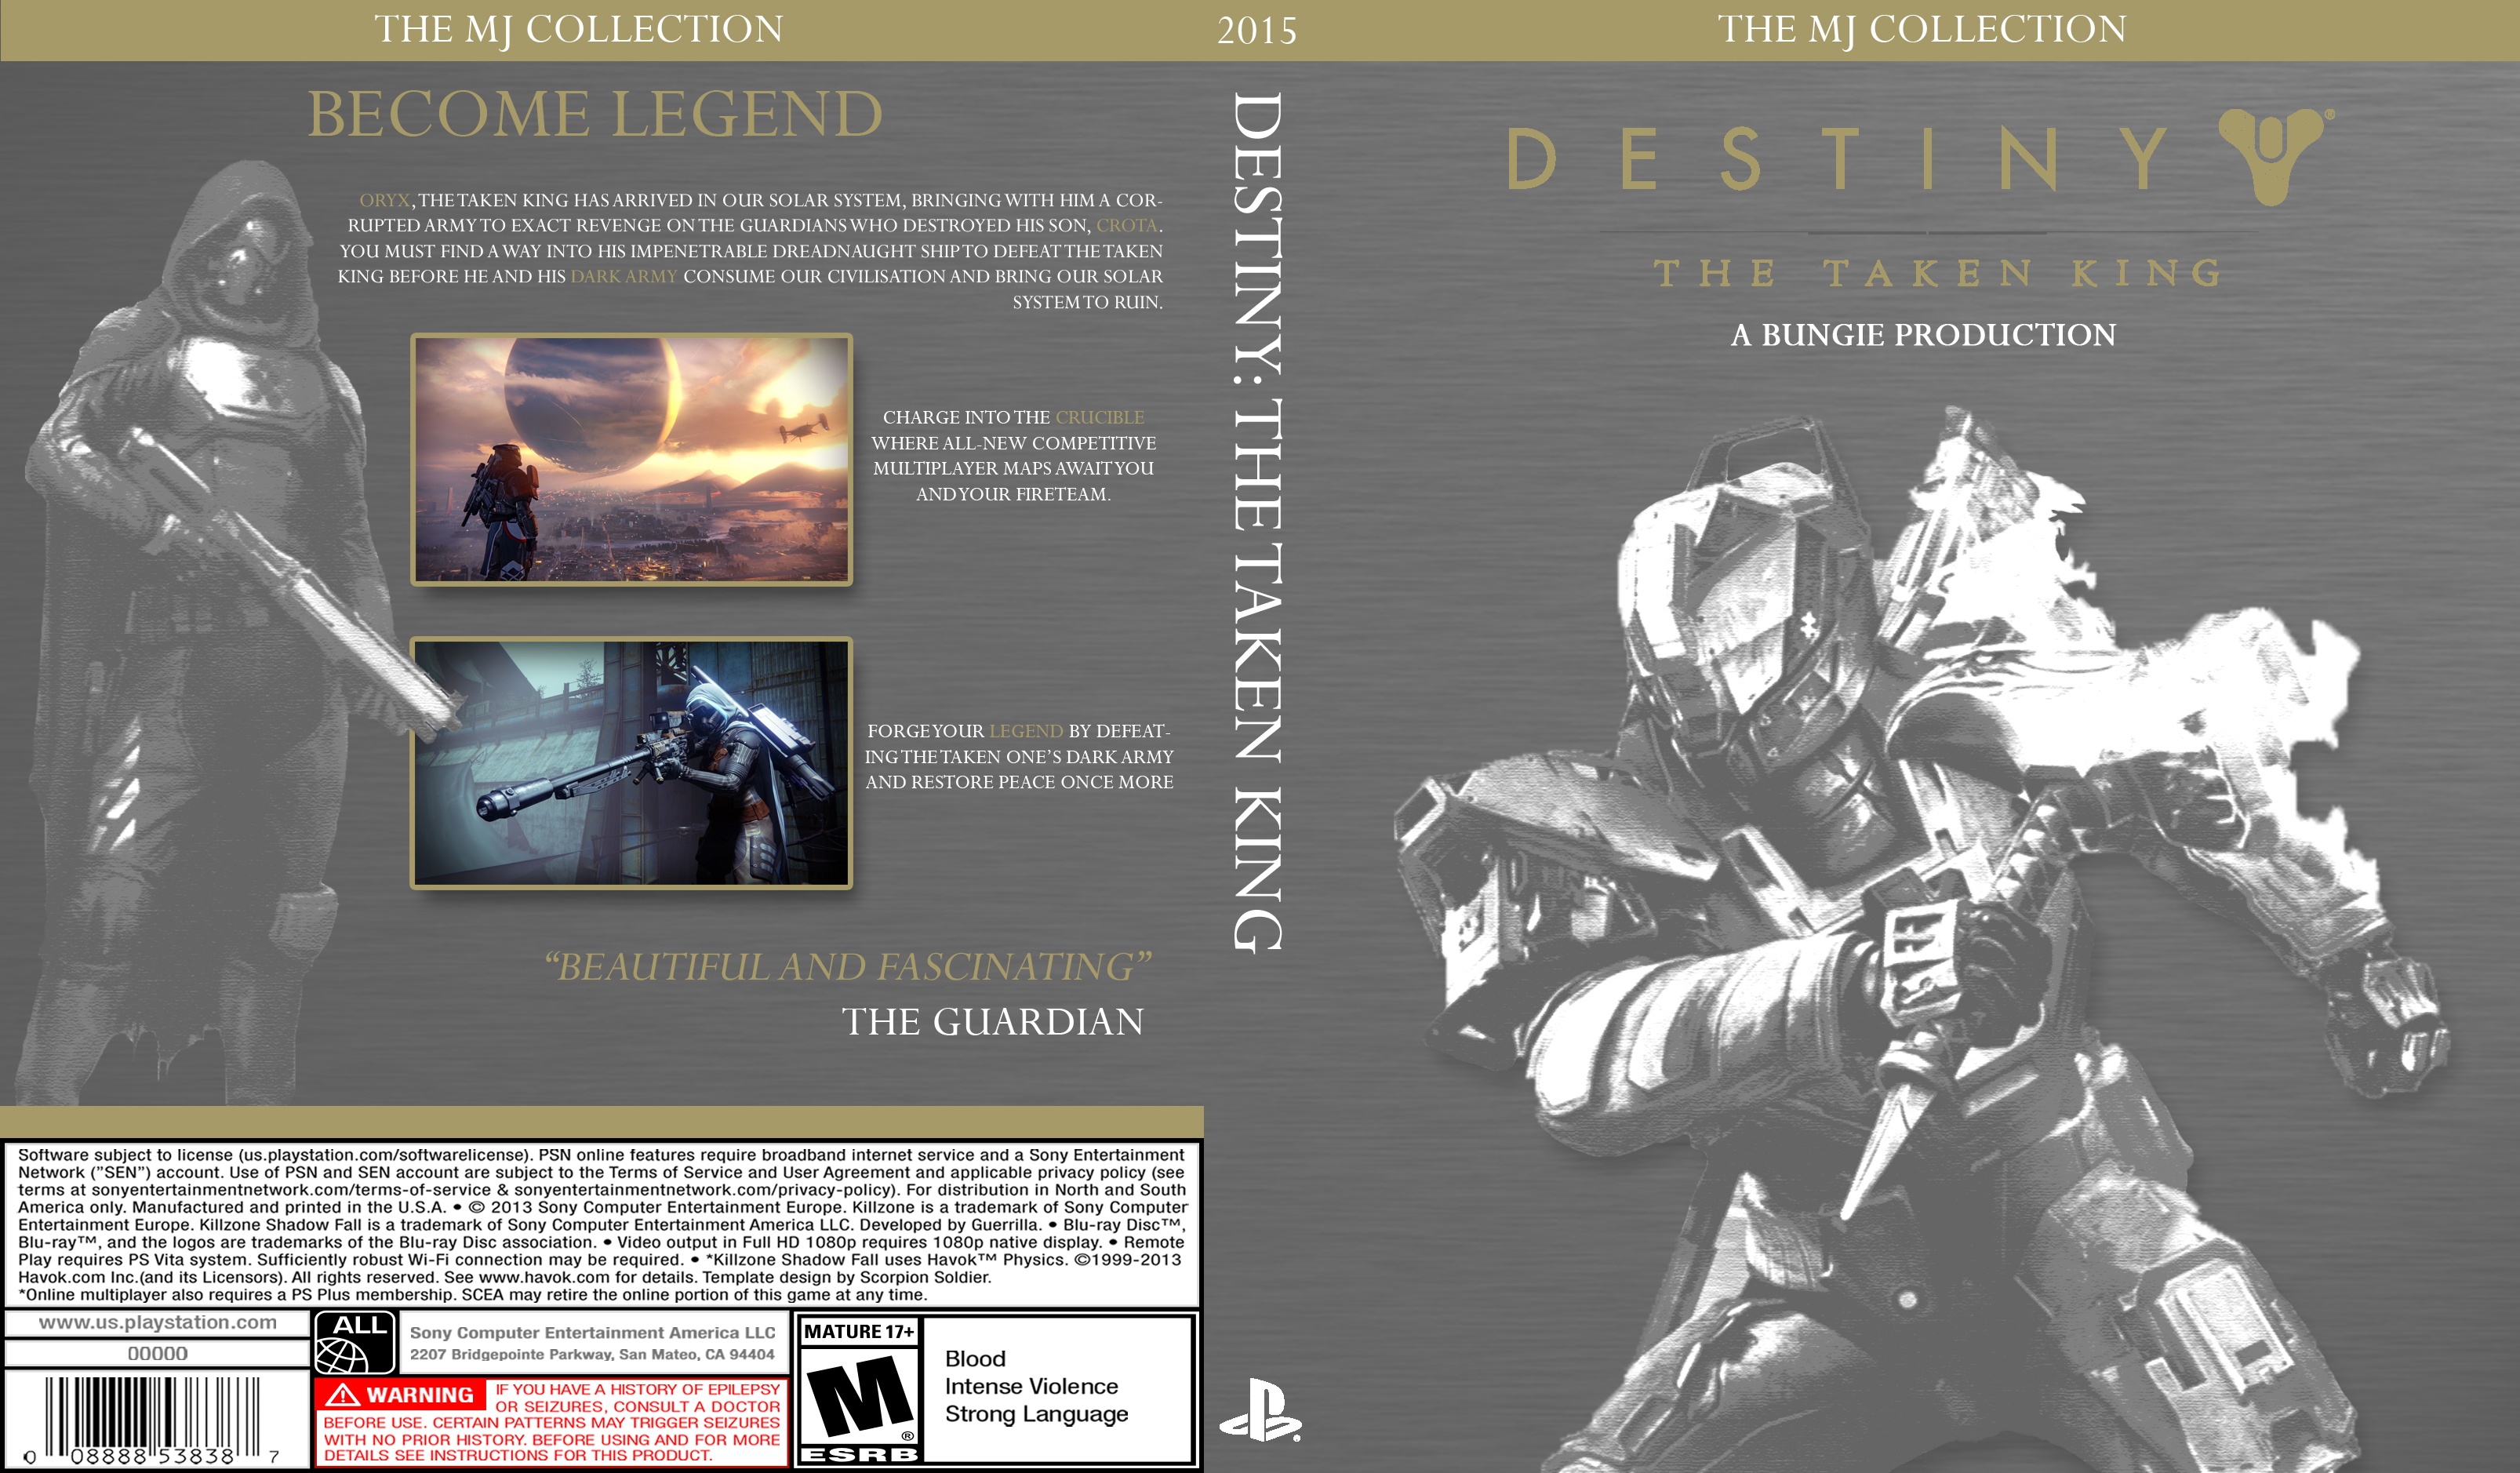 Destiny (PS4) The Taken King box cover